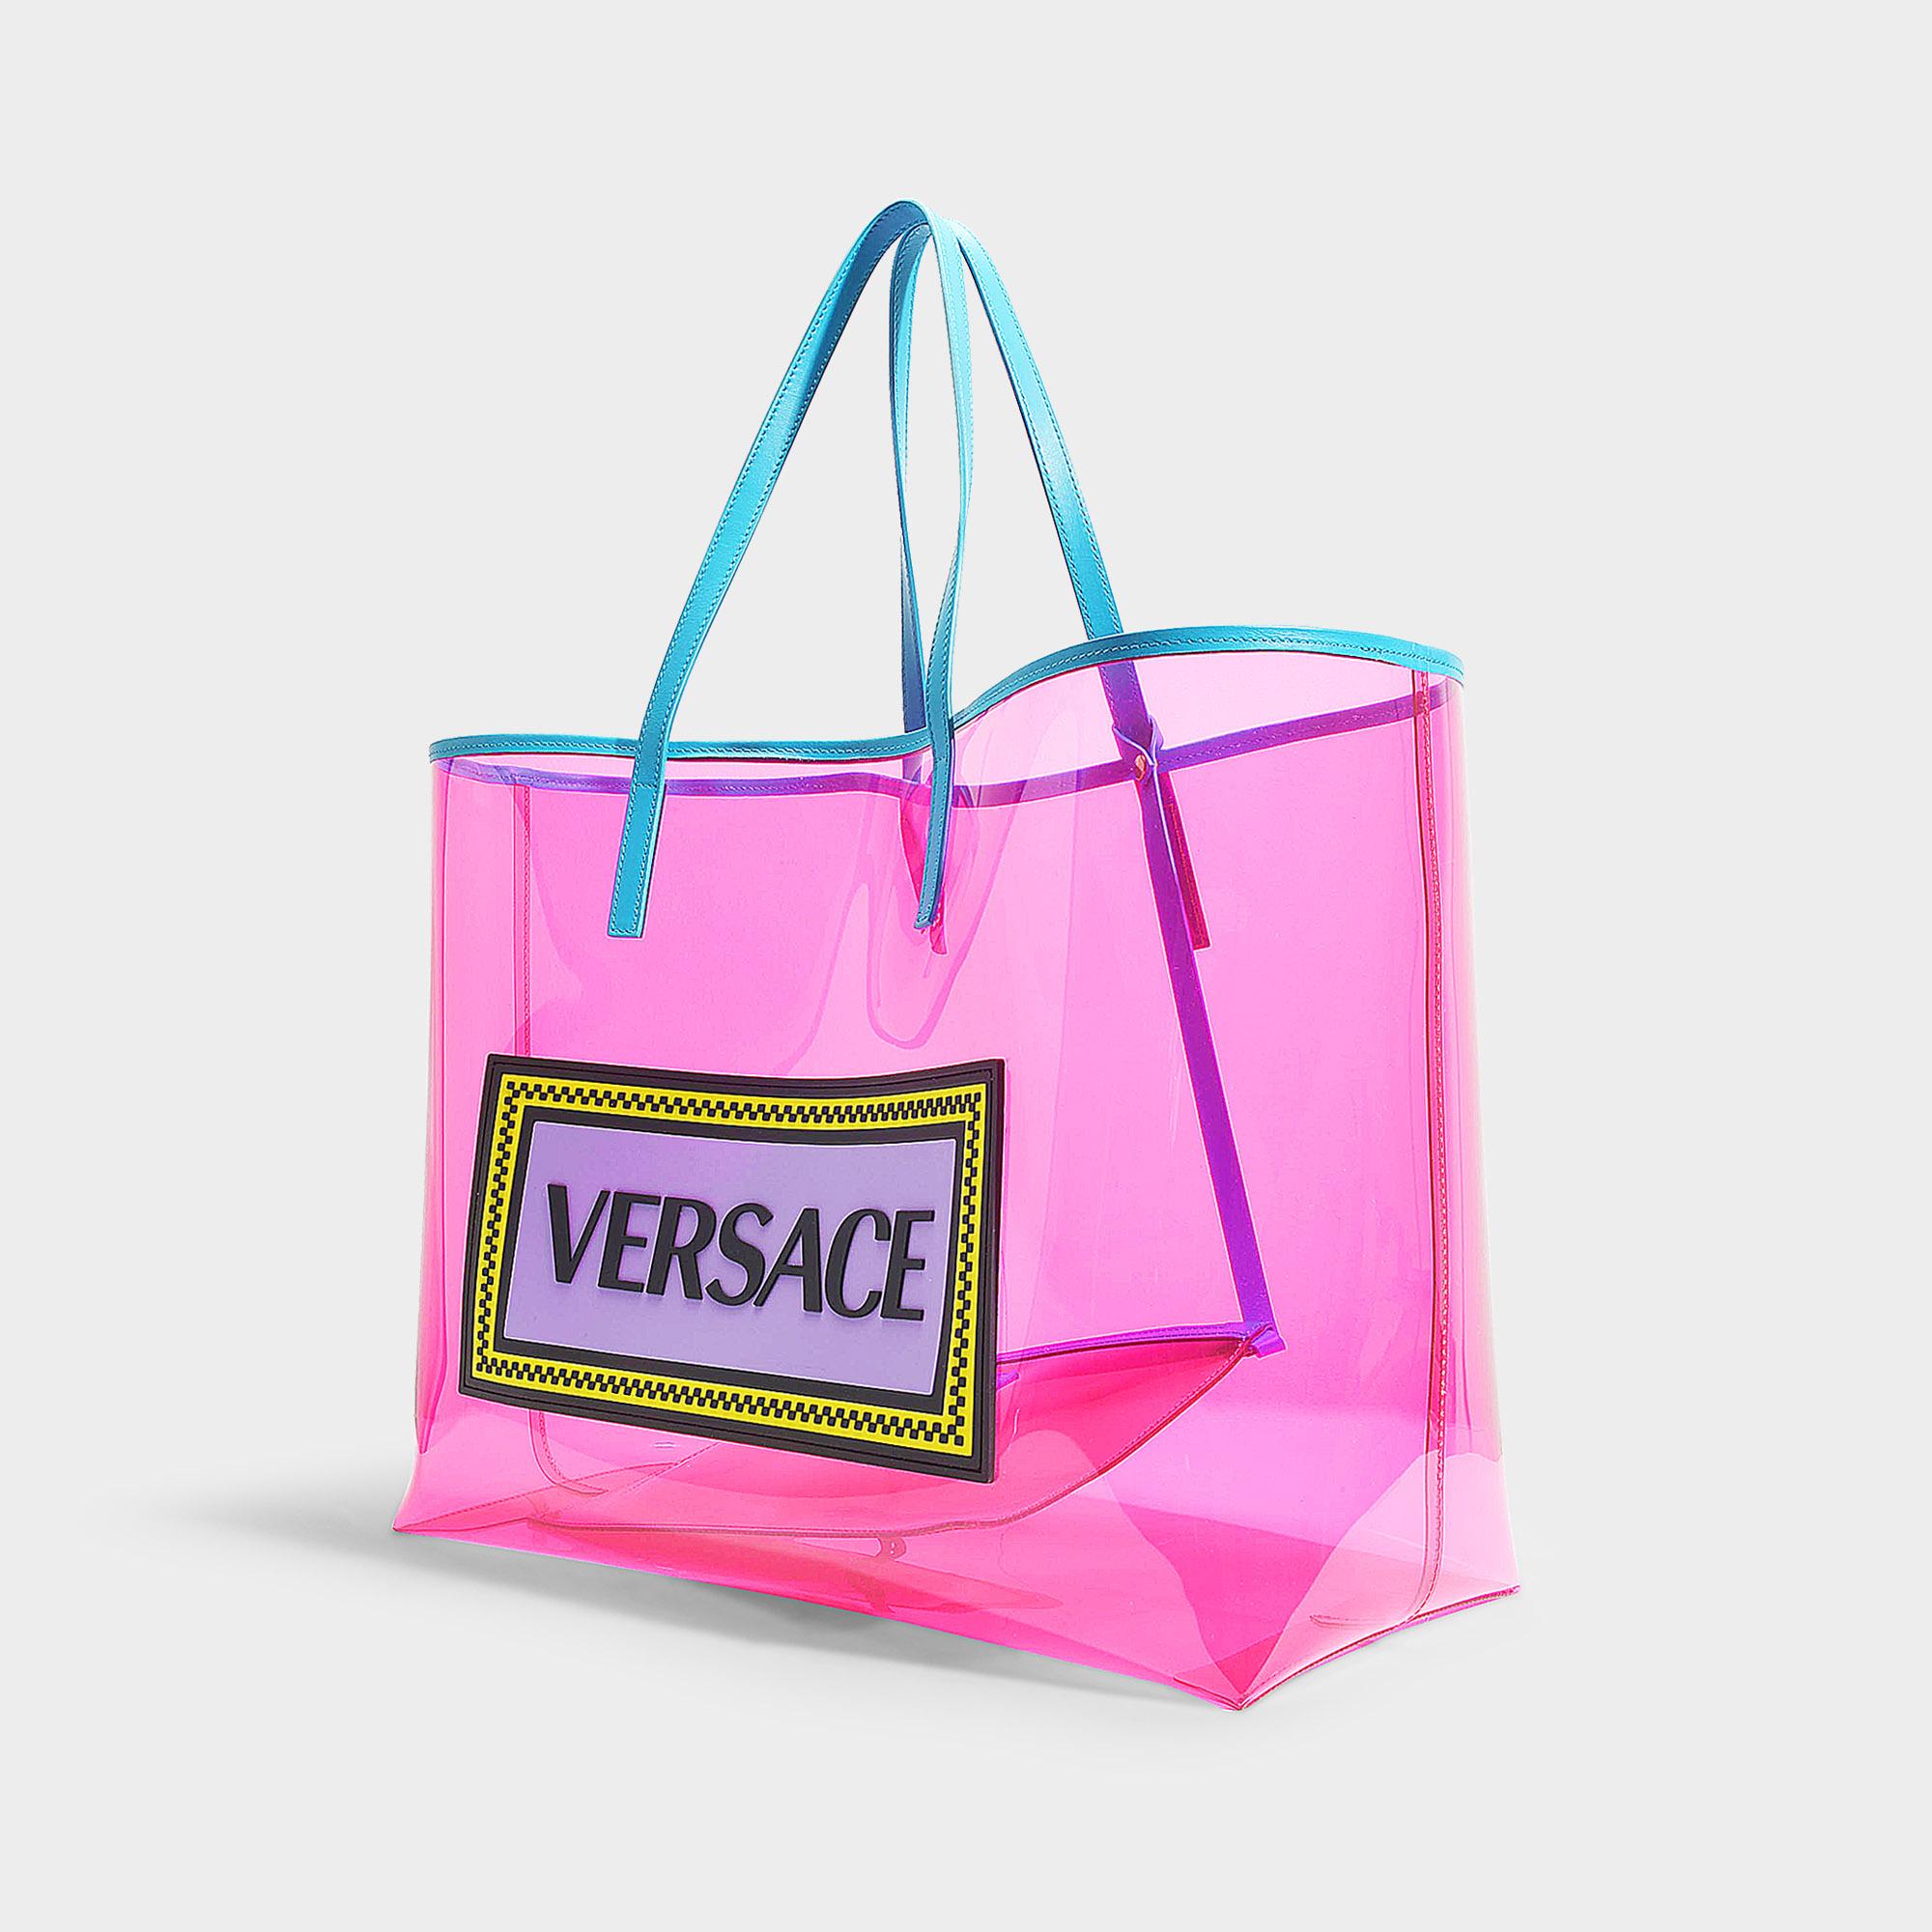 Versace Logo Neon Pink Tote Bag Set for Sale in Boca Raton, FL - OfferUp